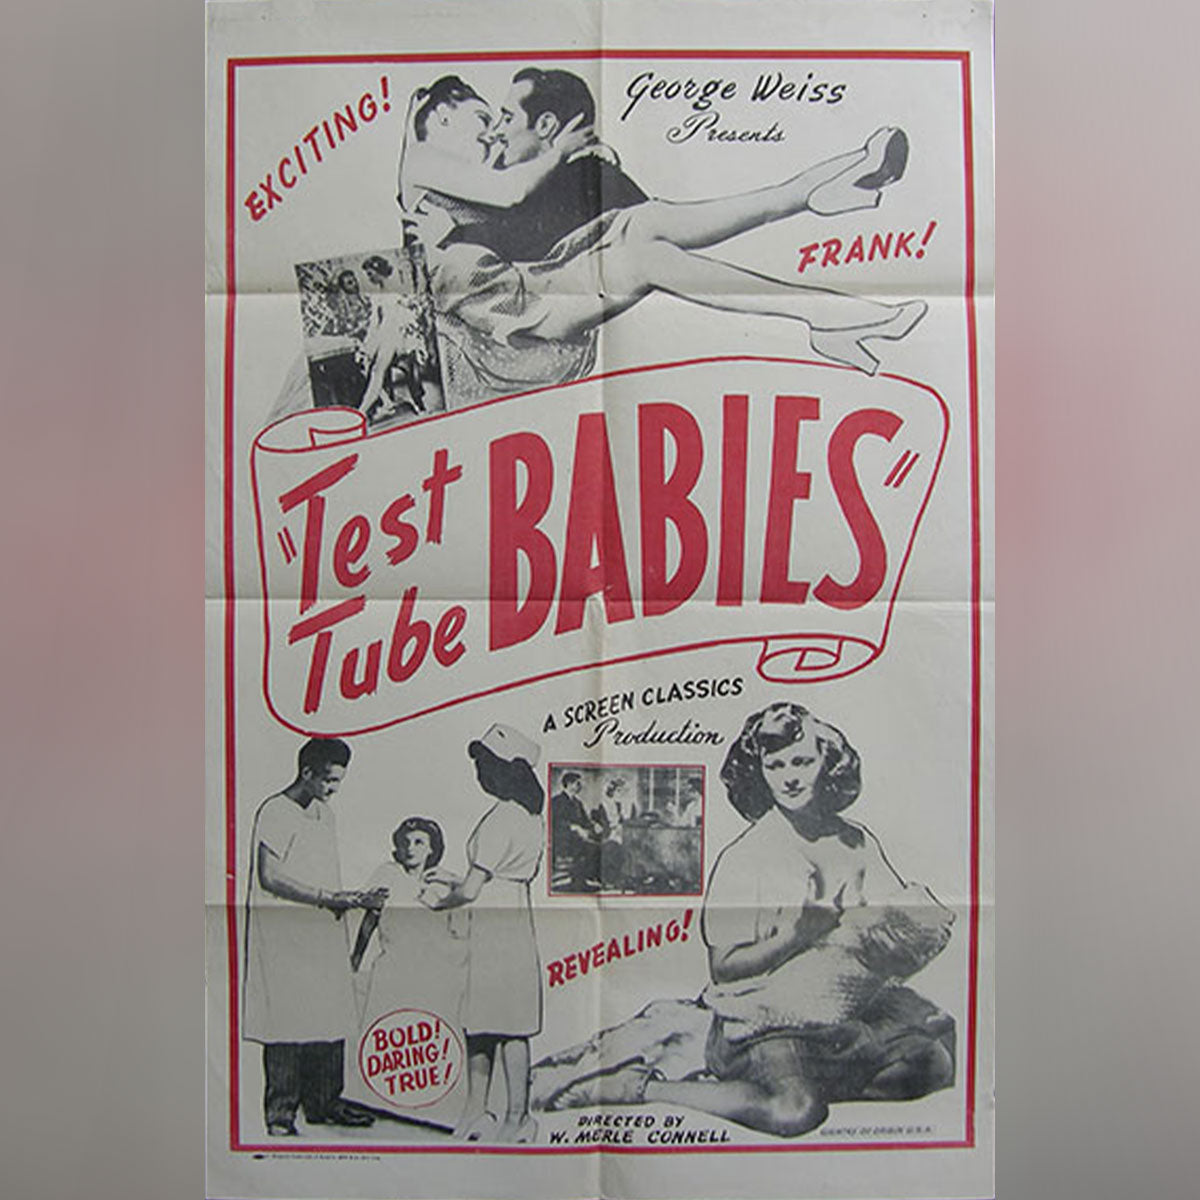 Test Tube Babies (1948)